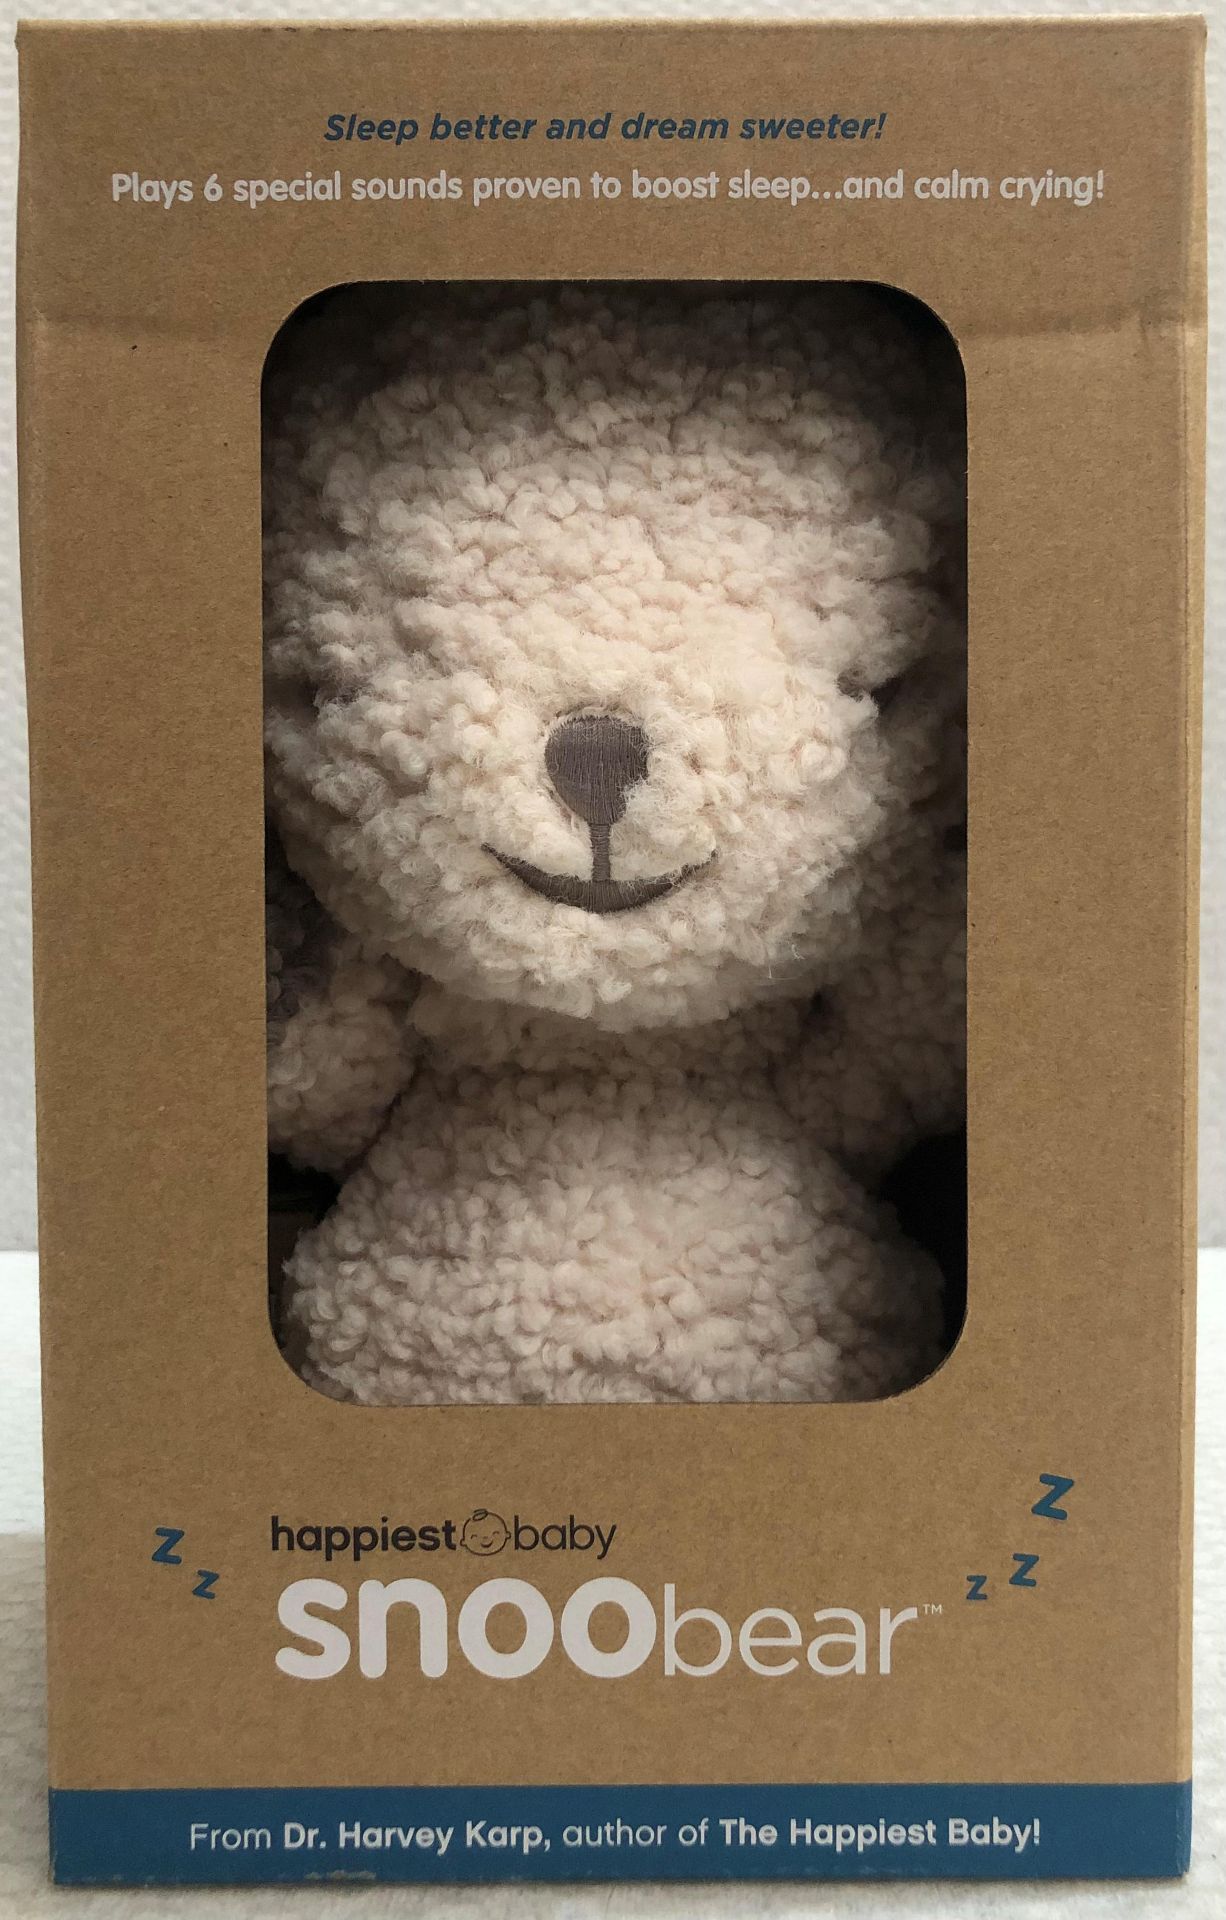 1 x Happiest Baby Snoobear Sleep Aid - New/Boxed - HTYS309 - CL987 - Location: Altrincham WA14 - - Image 2 of 6